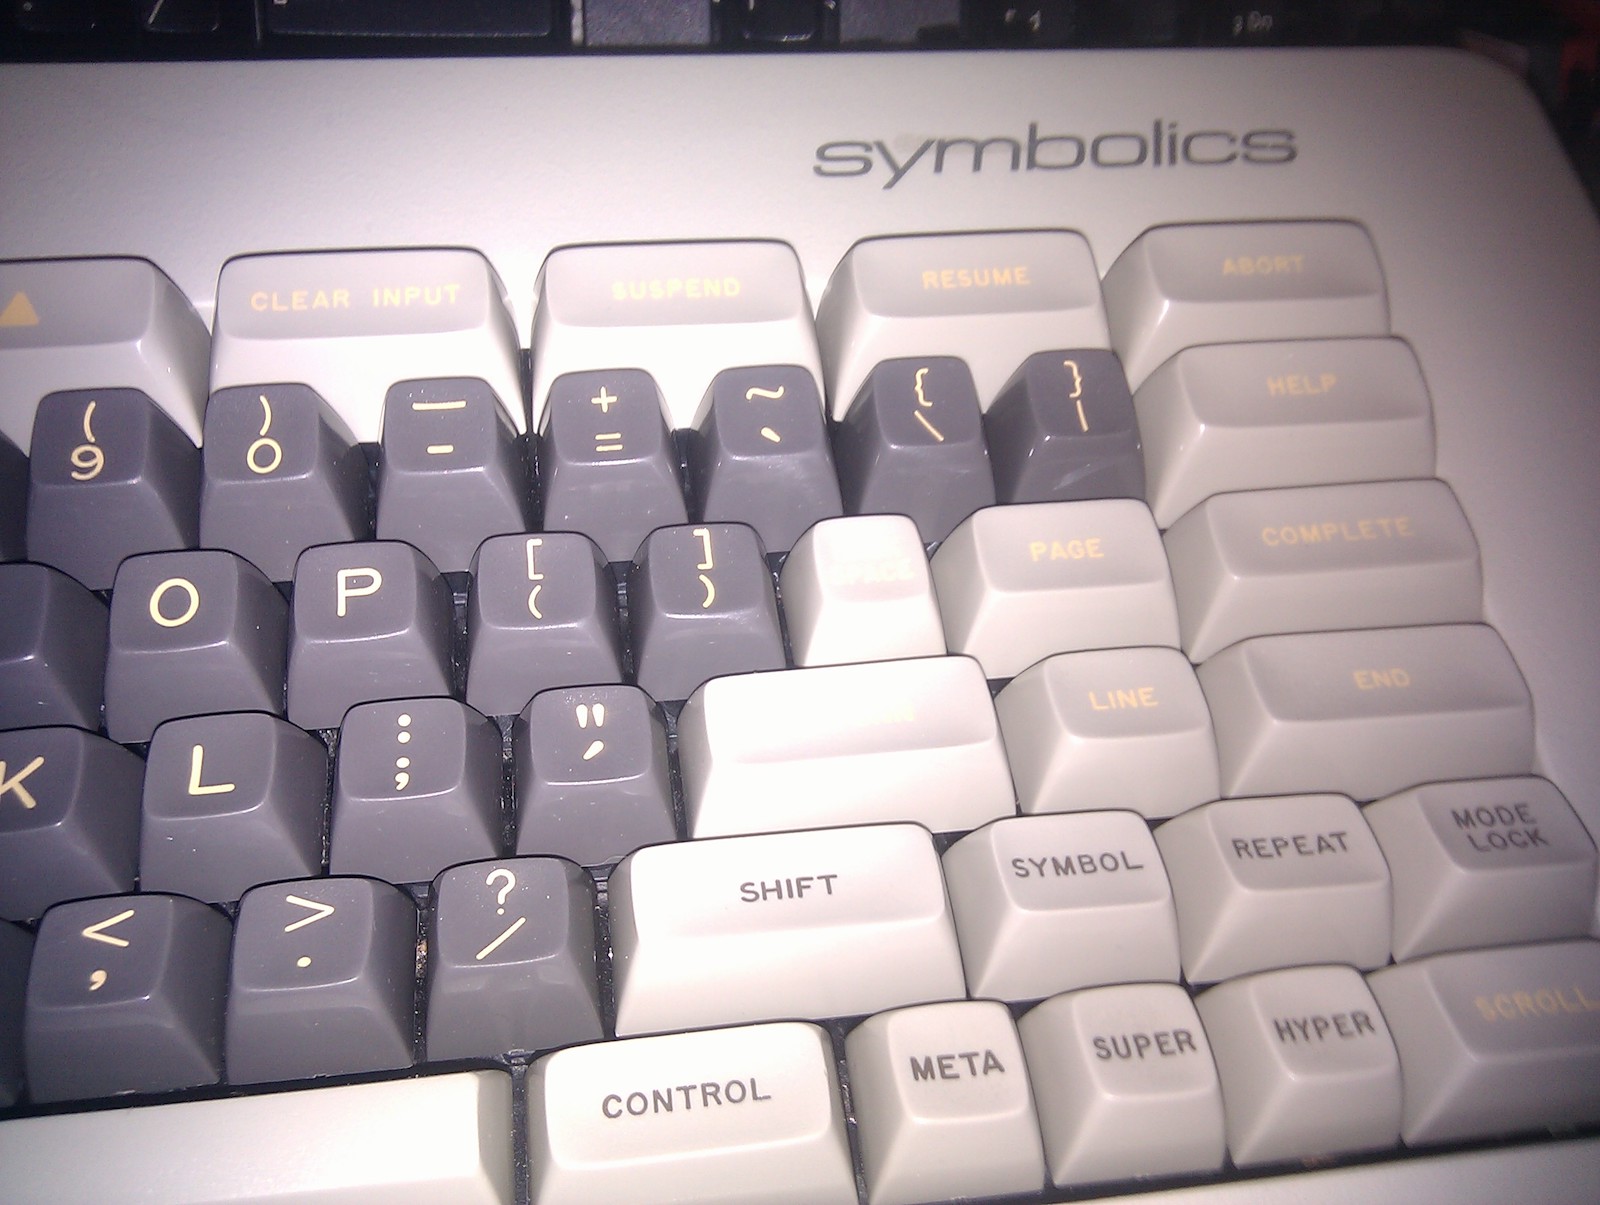 Symbolics "old style" keyboard